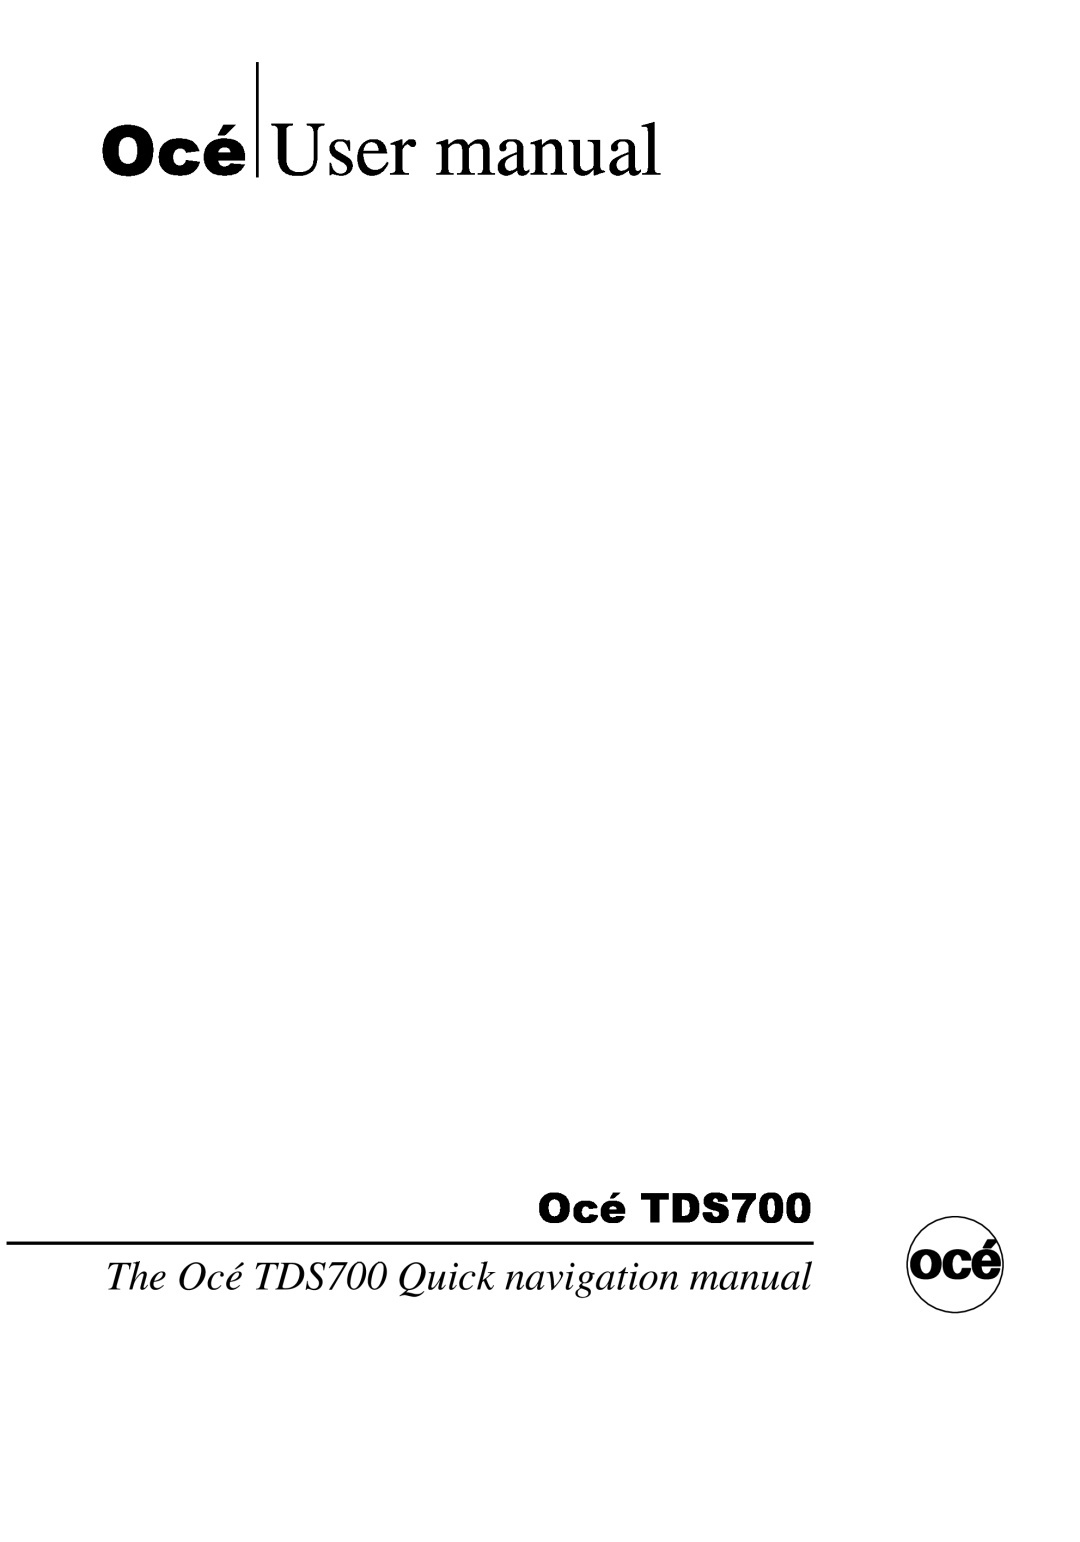 Oce North America user manual User manual, The Océ TDS700 Quick navigation manual 